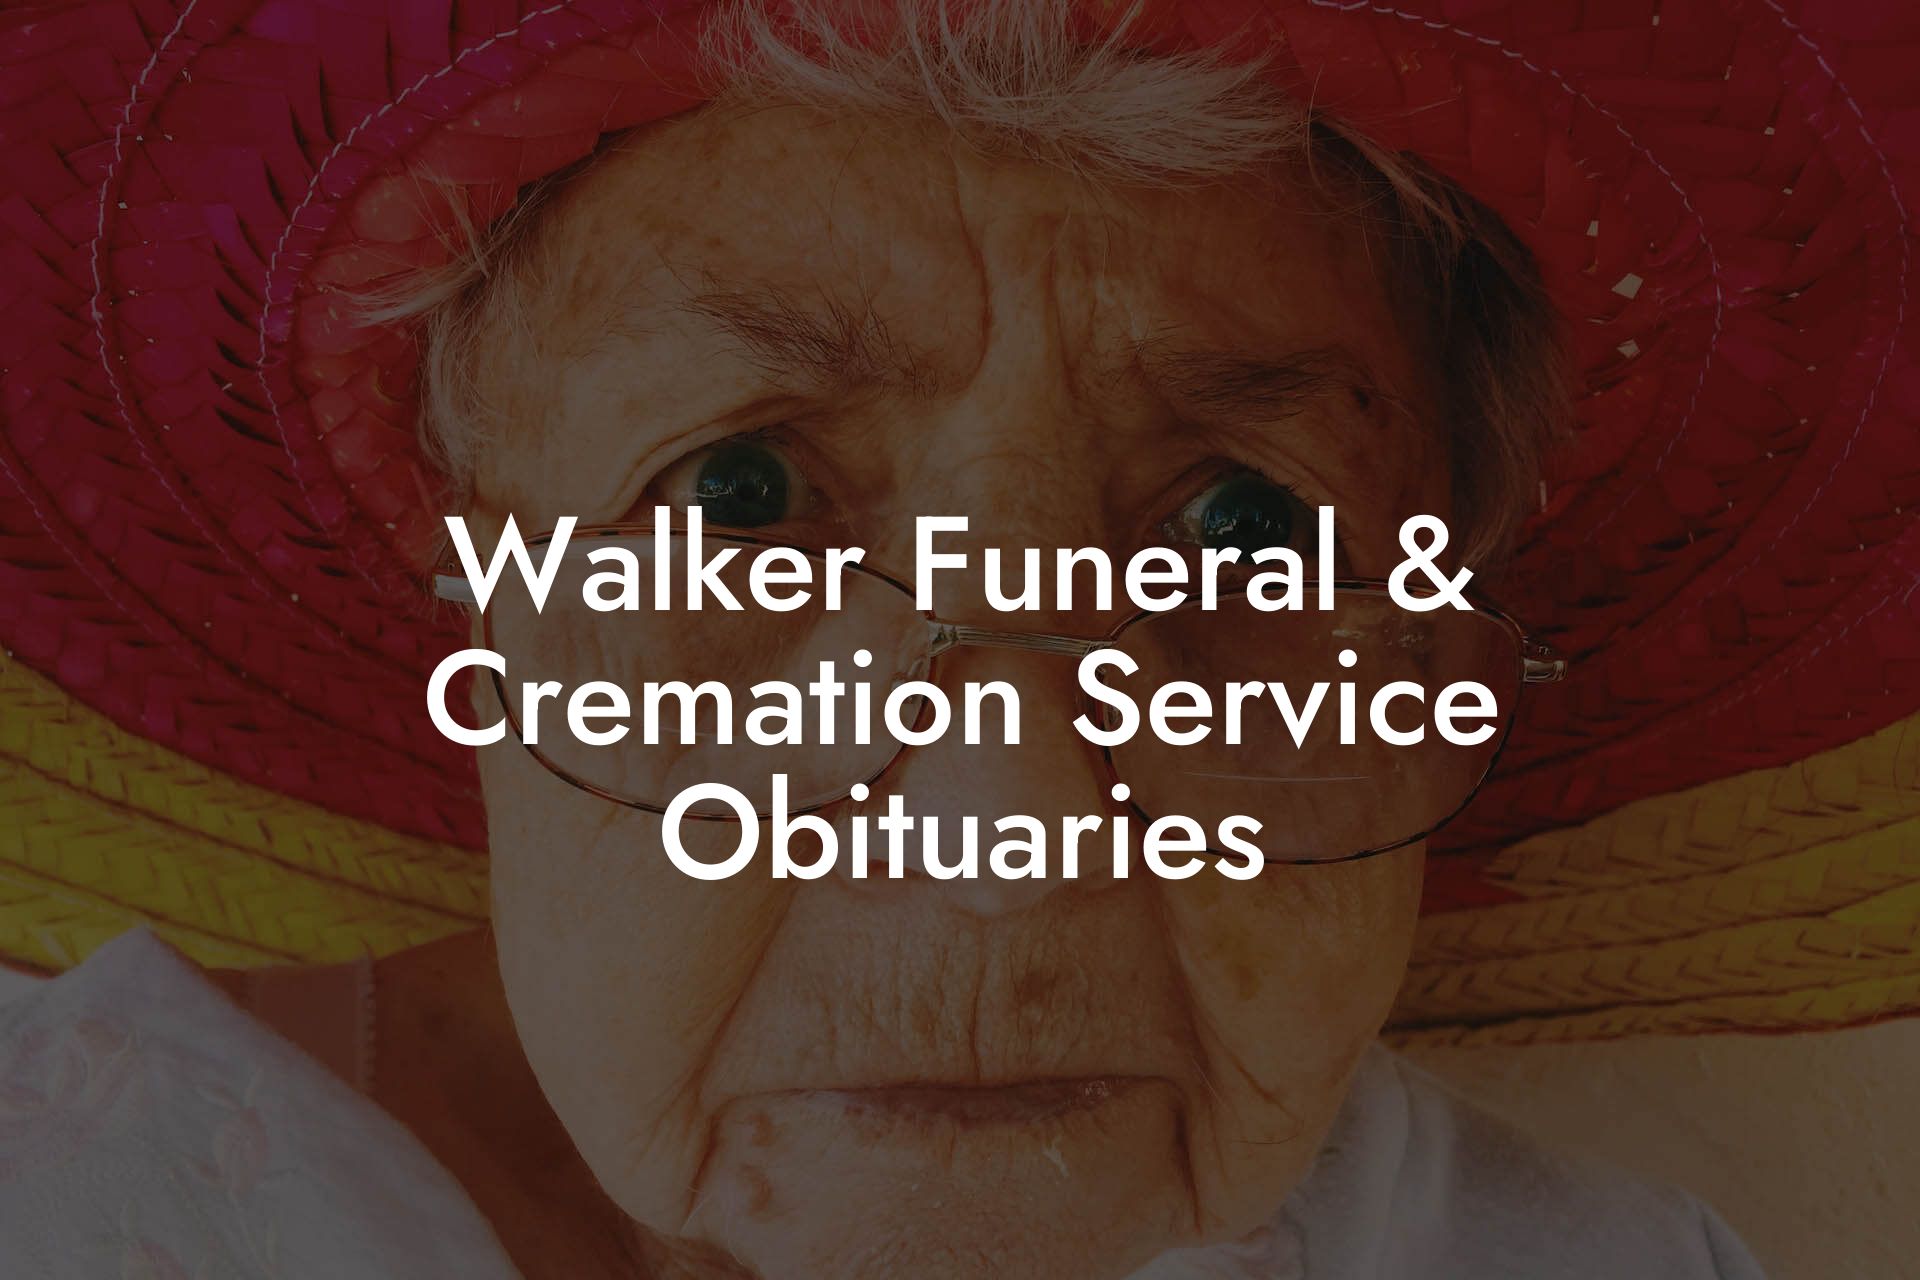 Walker Funeral & Cremation Service Obituaries